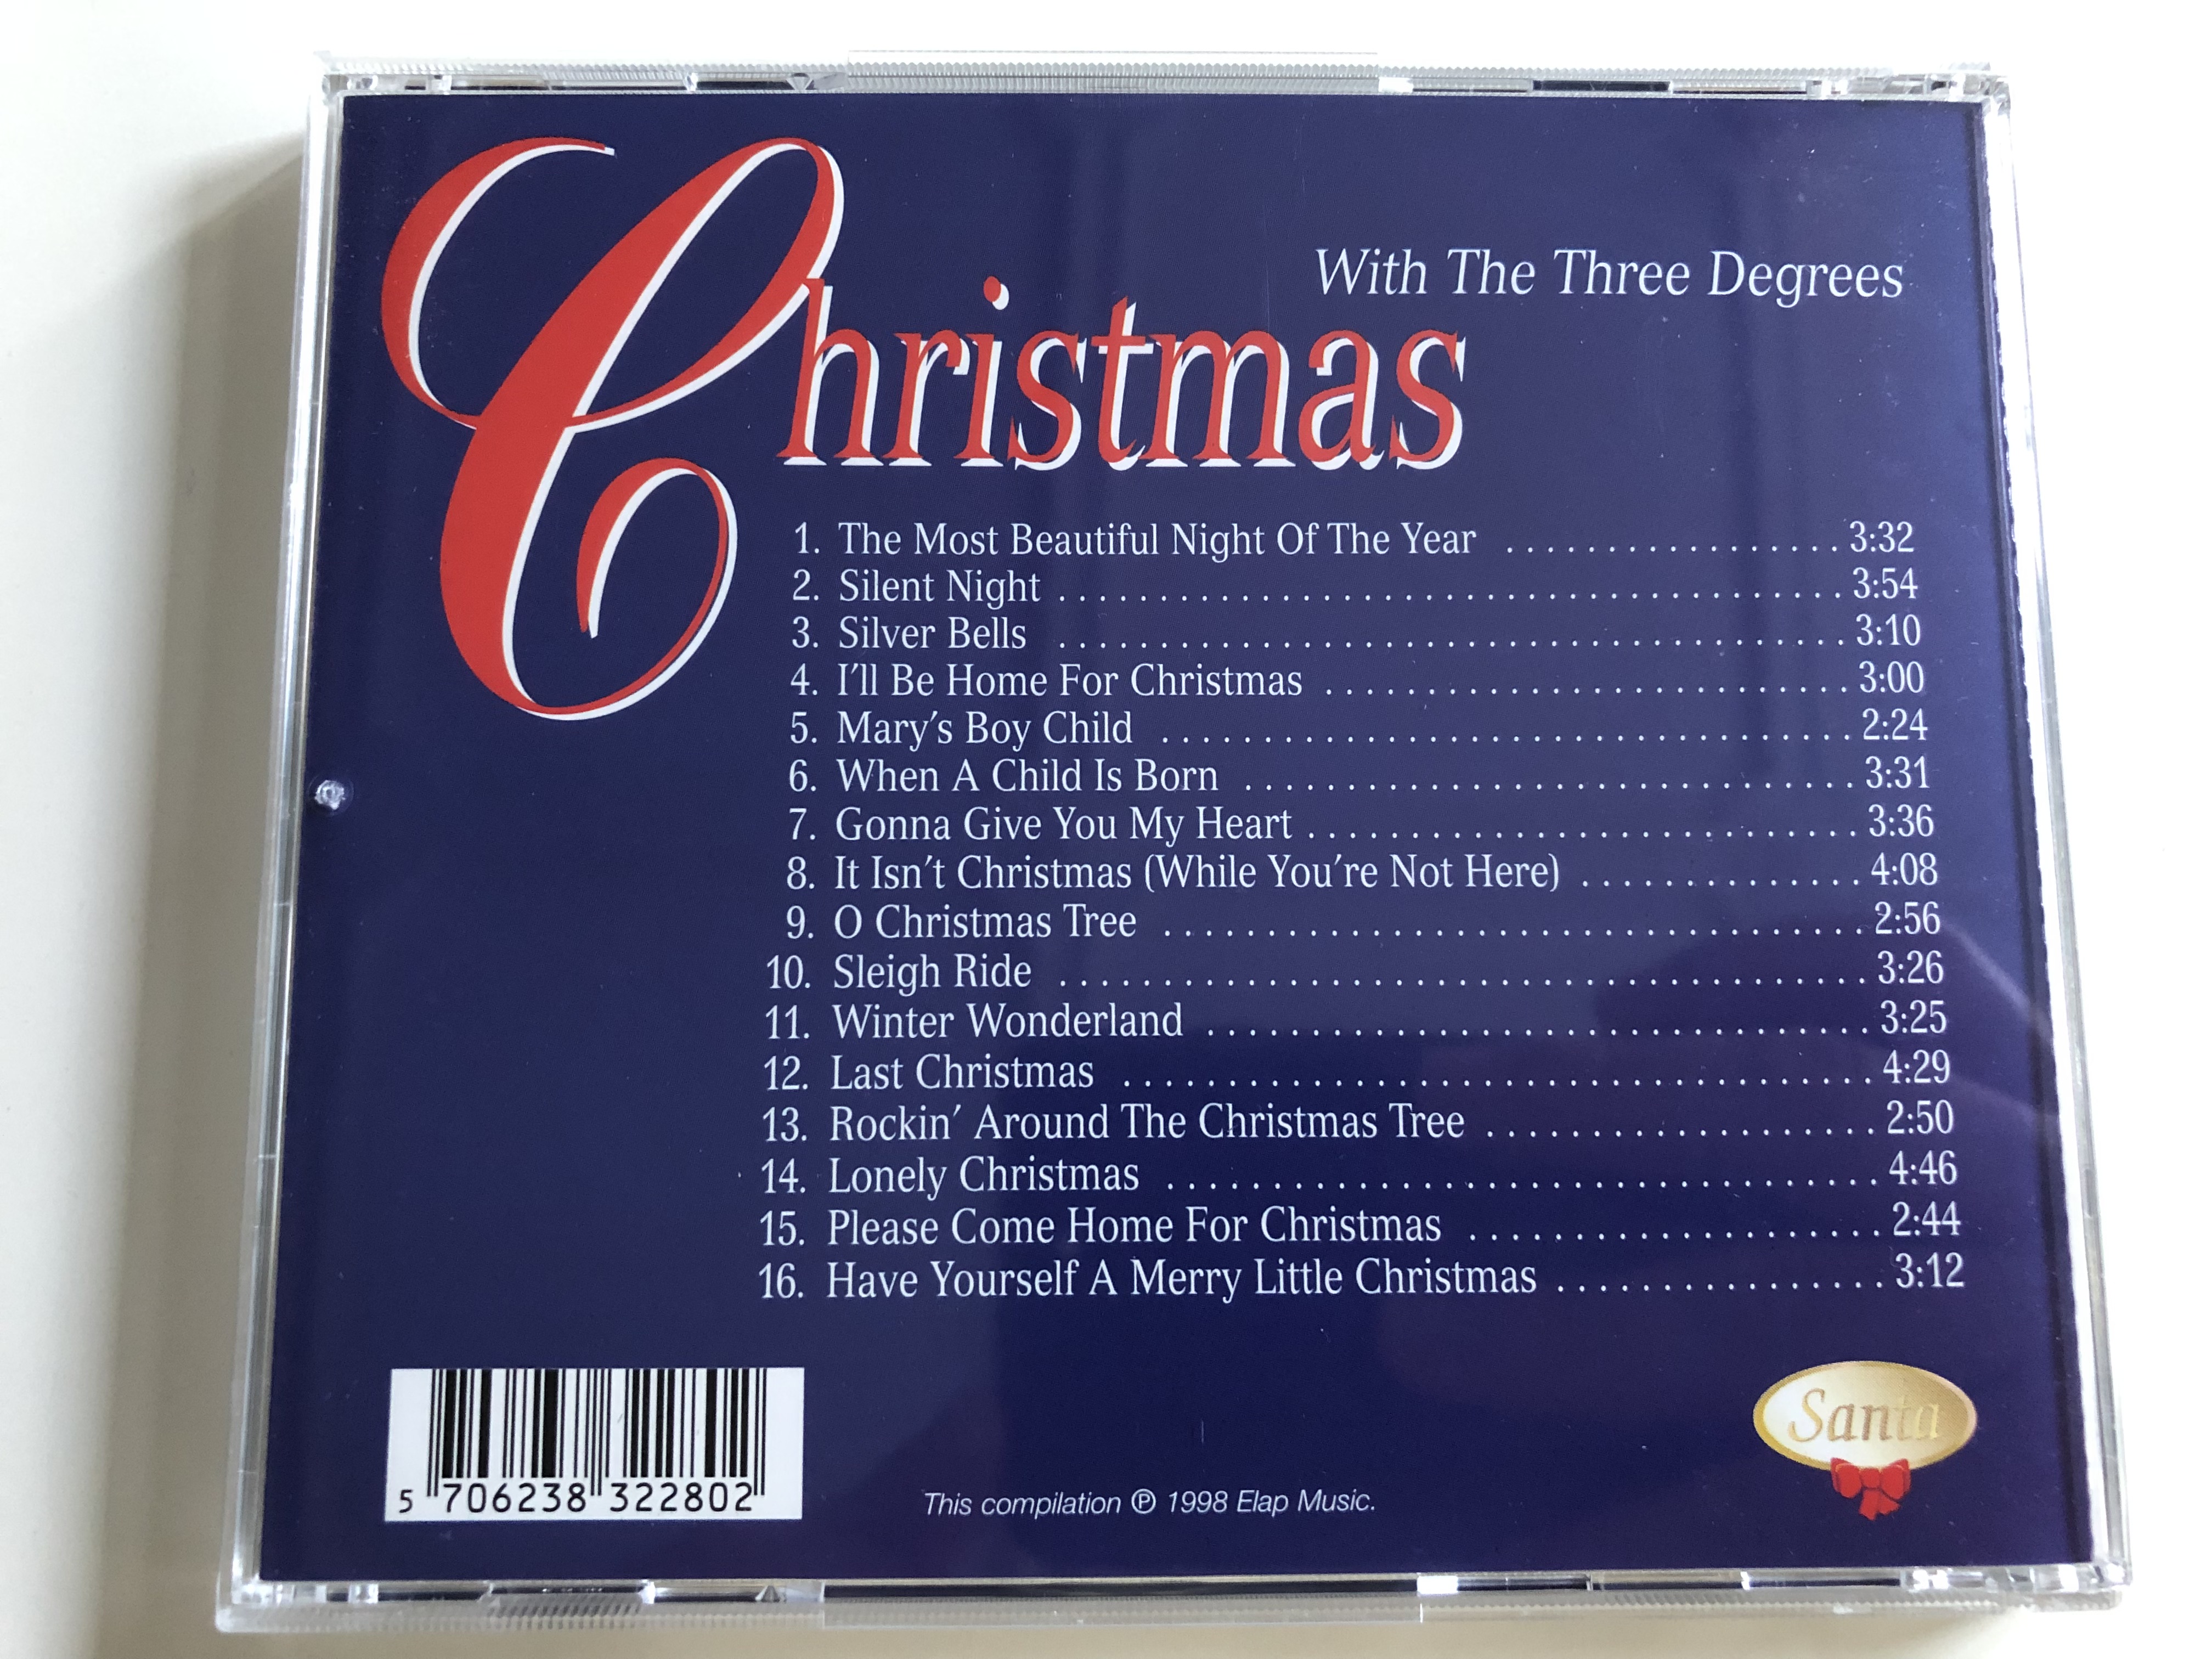 christmas-with-the-three-degrees-16.-x-mas-classics-audio-cd-1998-elap-music-5-.jpg